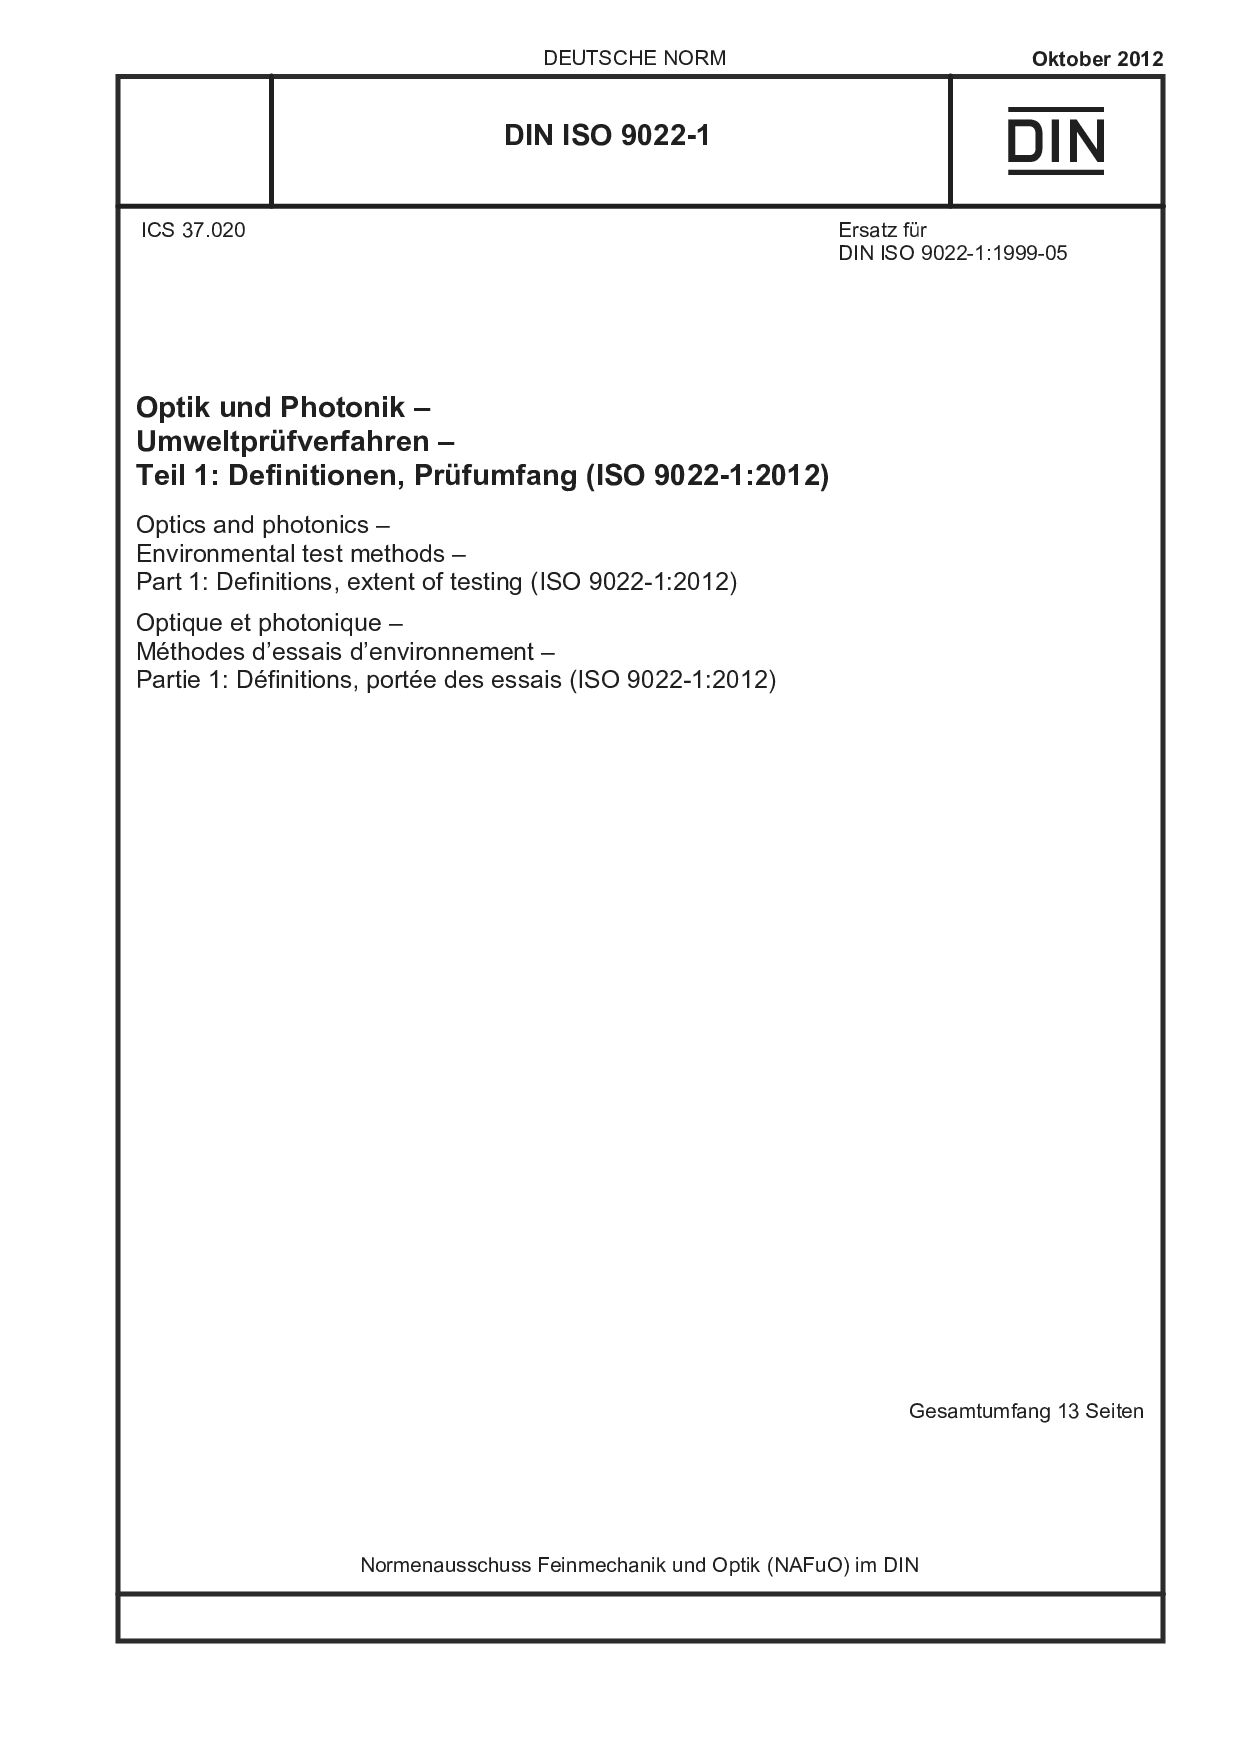 DIN ISO 9022-1:2012